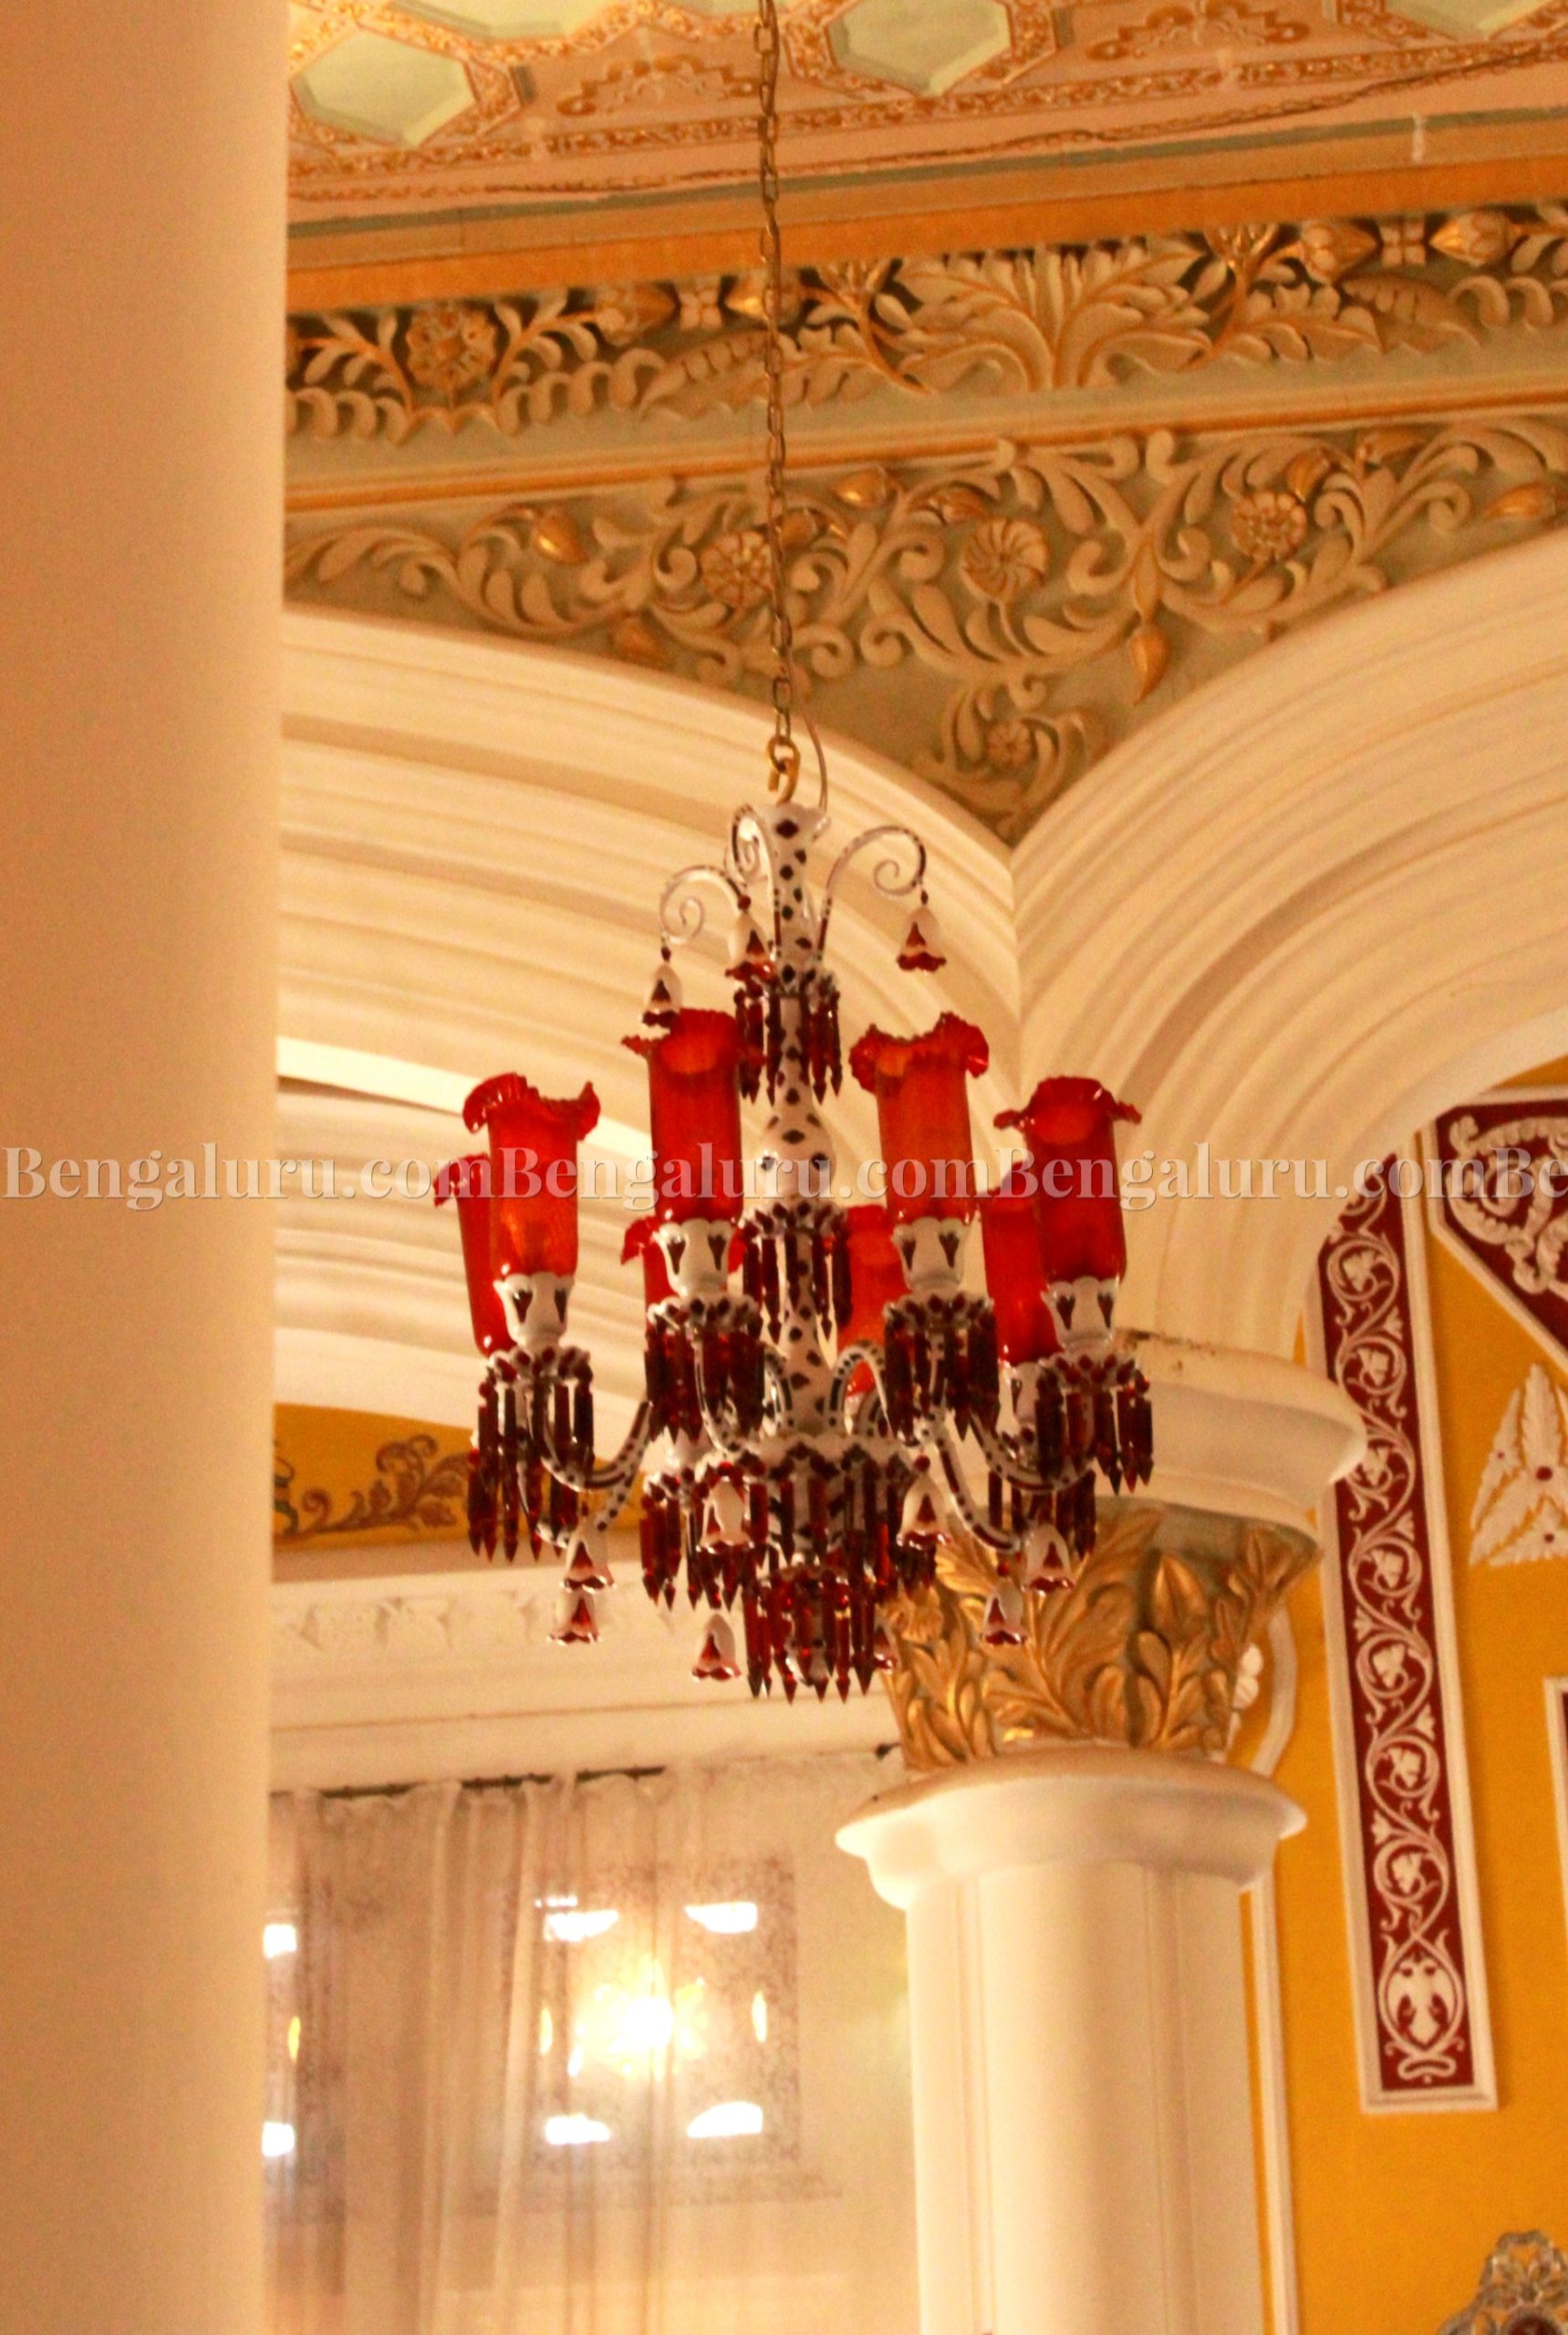 Bengaluru Palace - Chandeliers